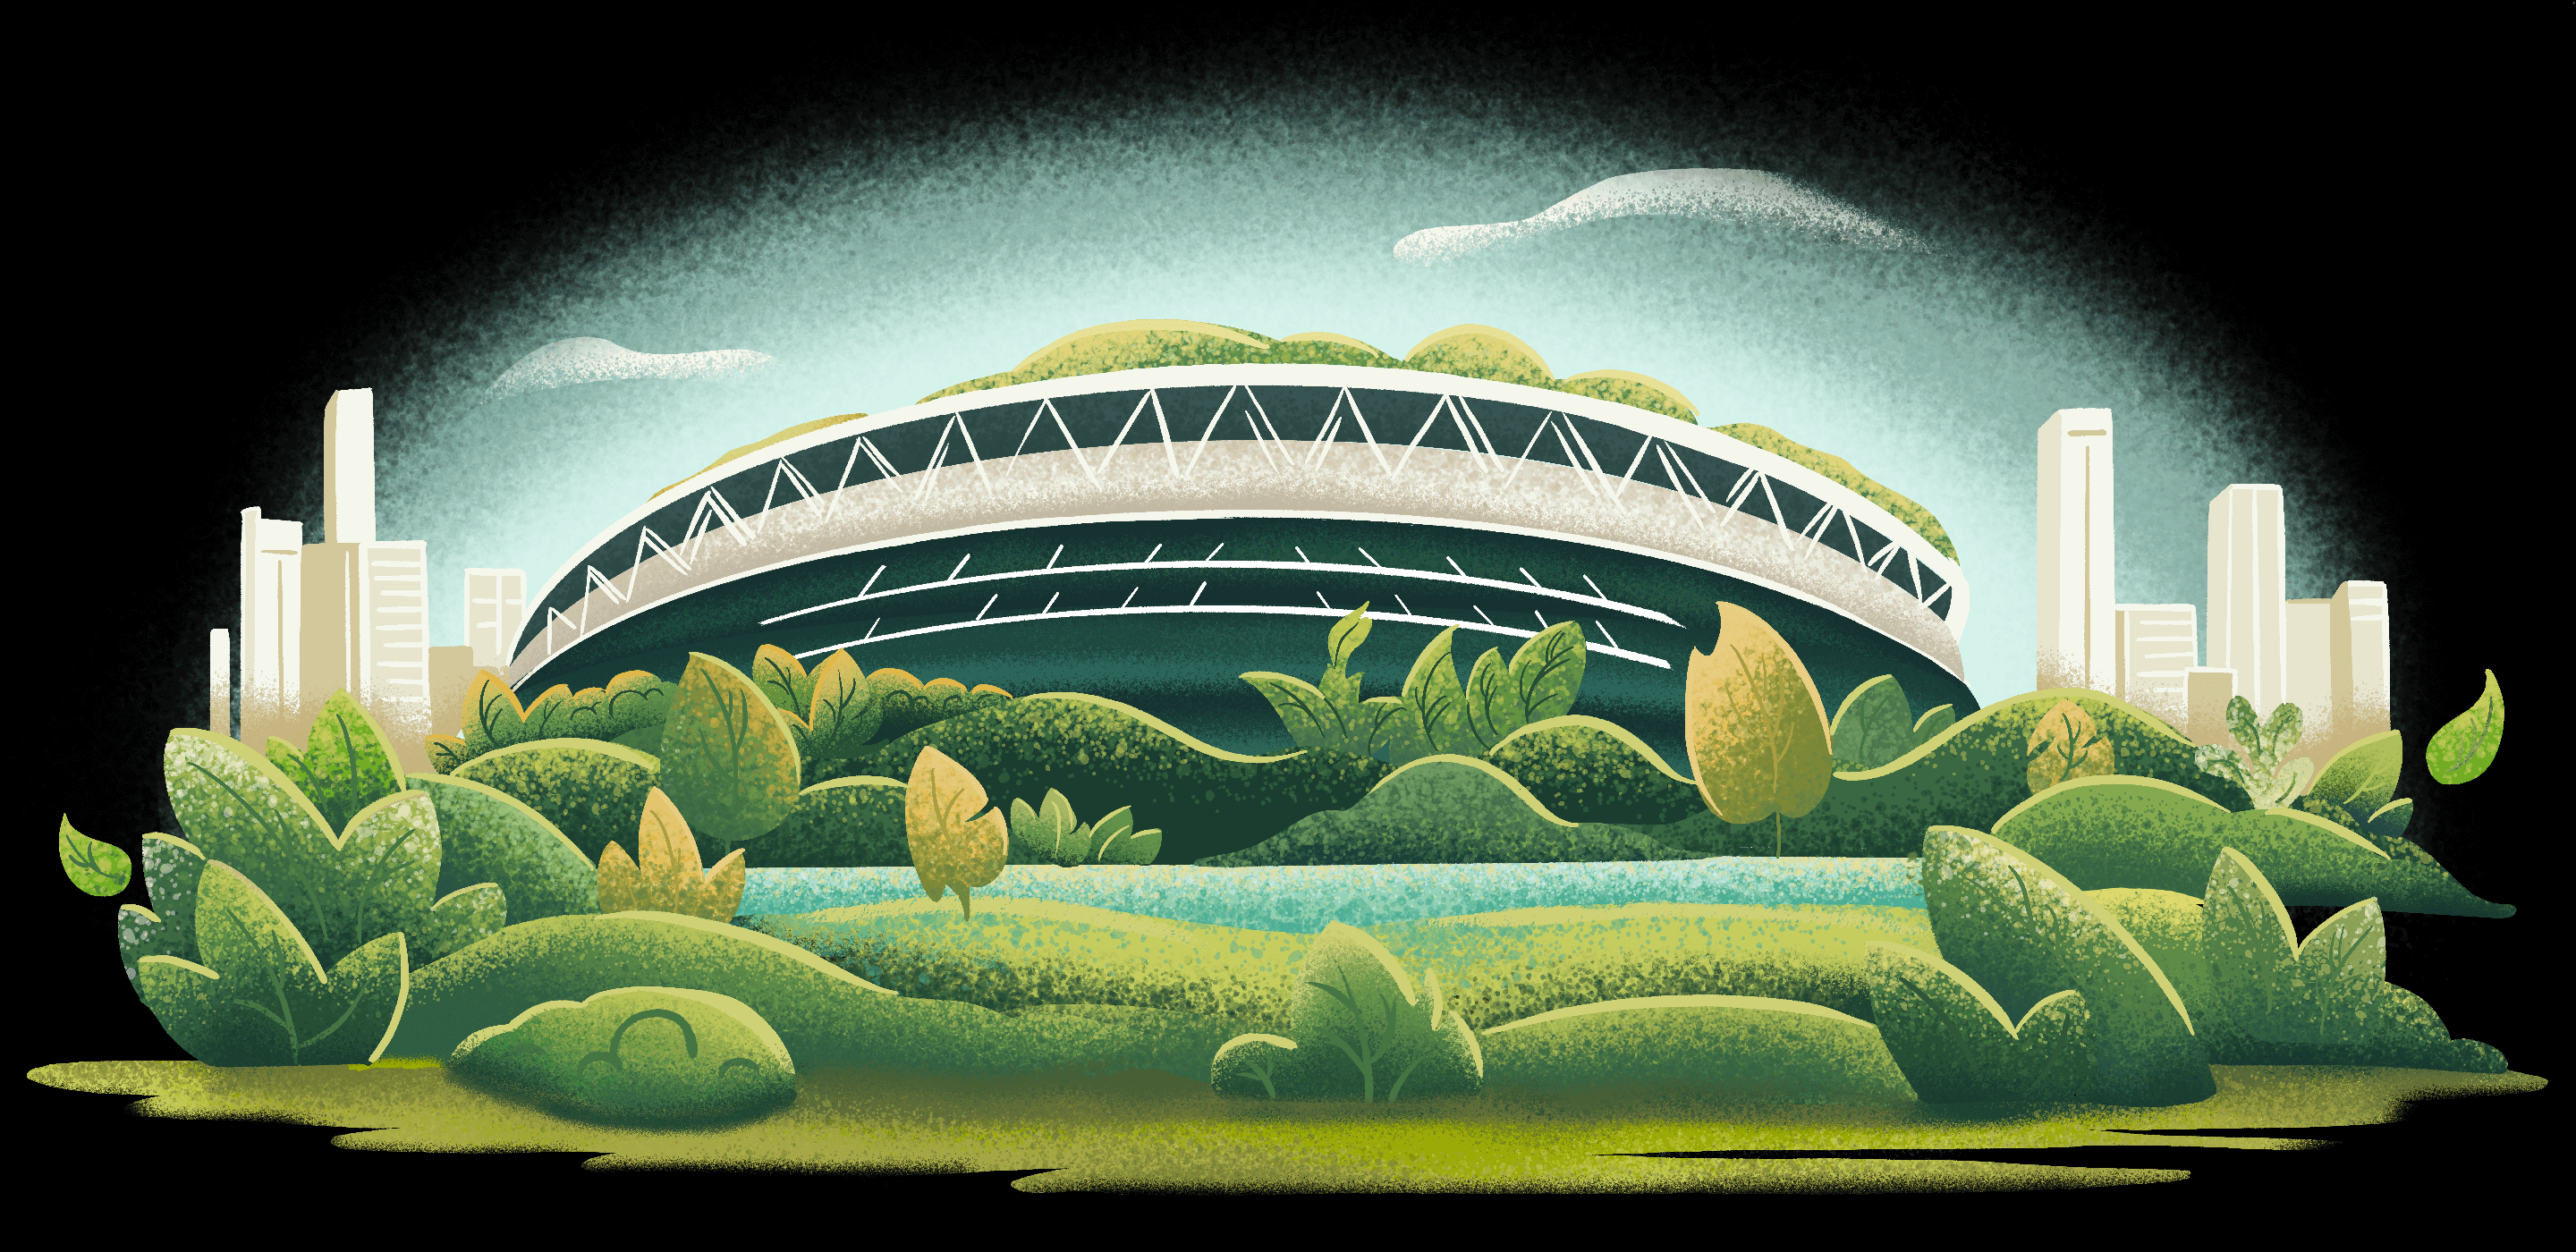 Illustration depicting a sustainably designed stadium / sports arena / entertainment venue